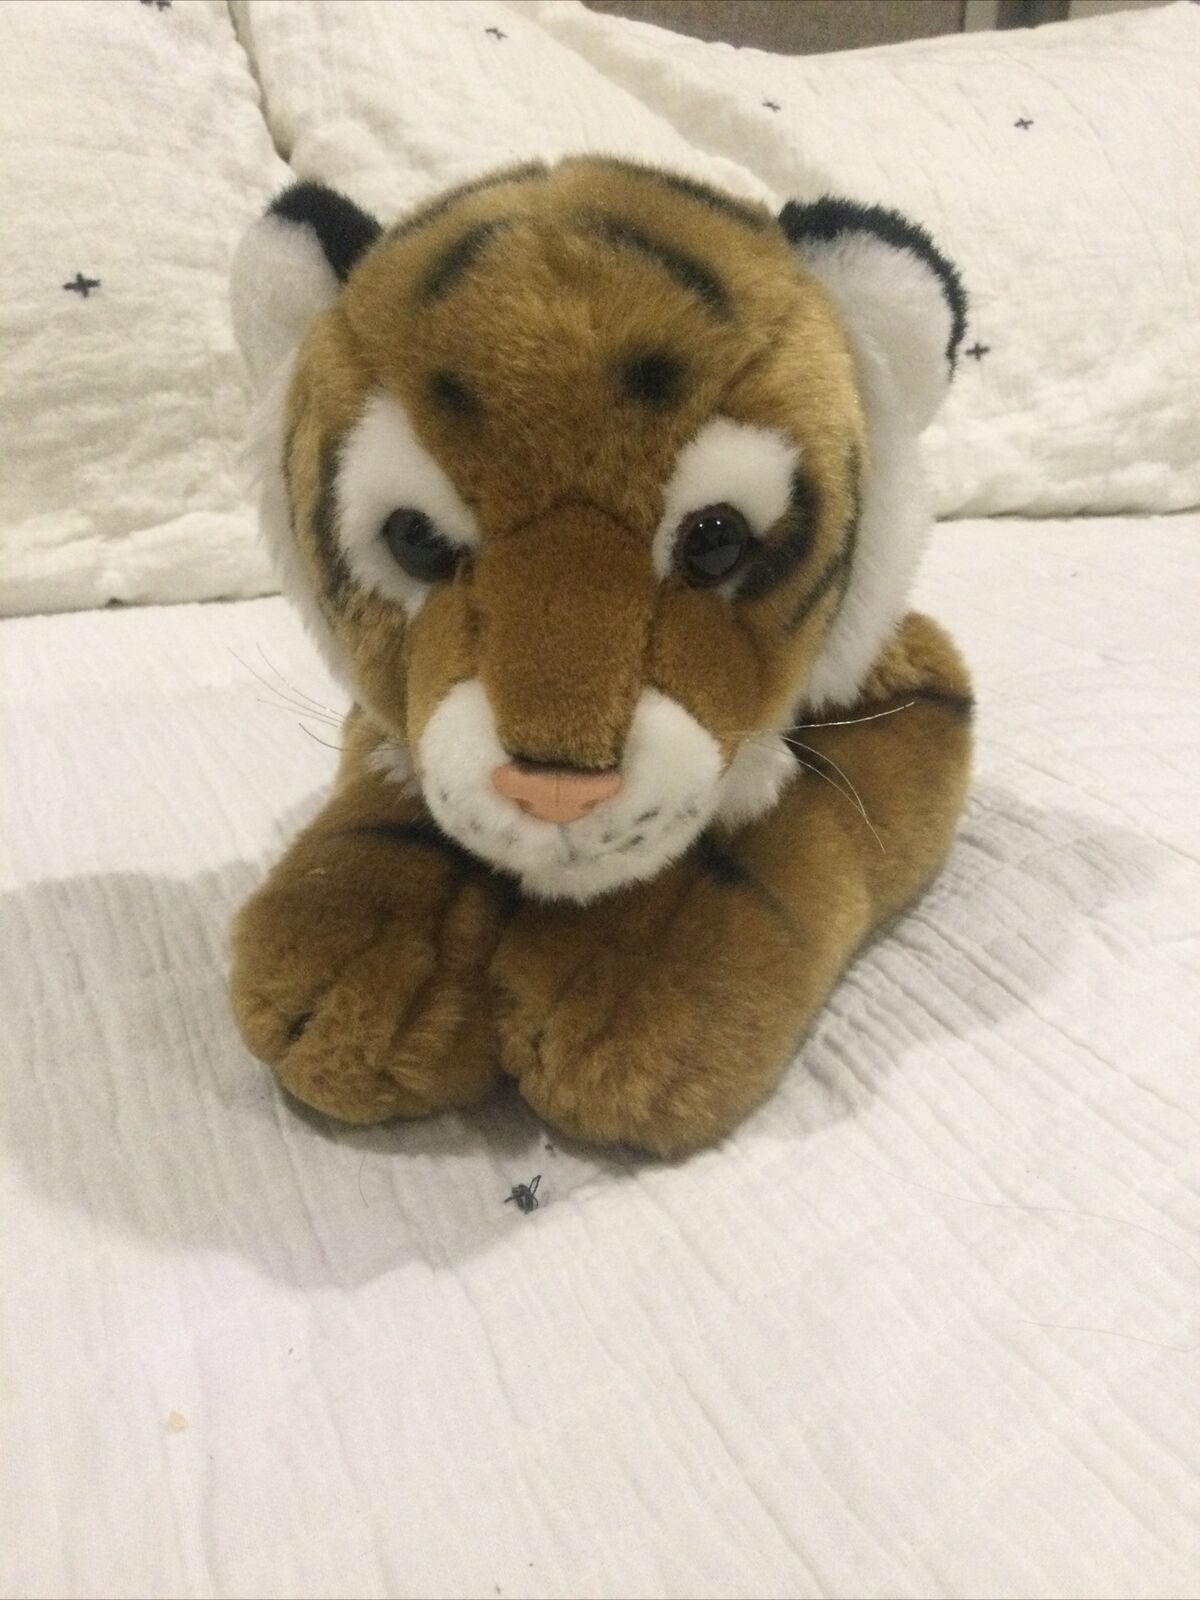 Animal Alley Tiger Plush Stuffed Animal (toys R Us, 2000) 18"